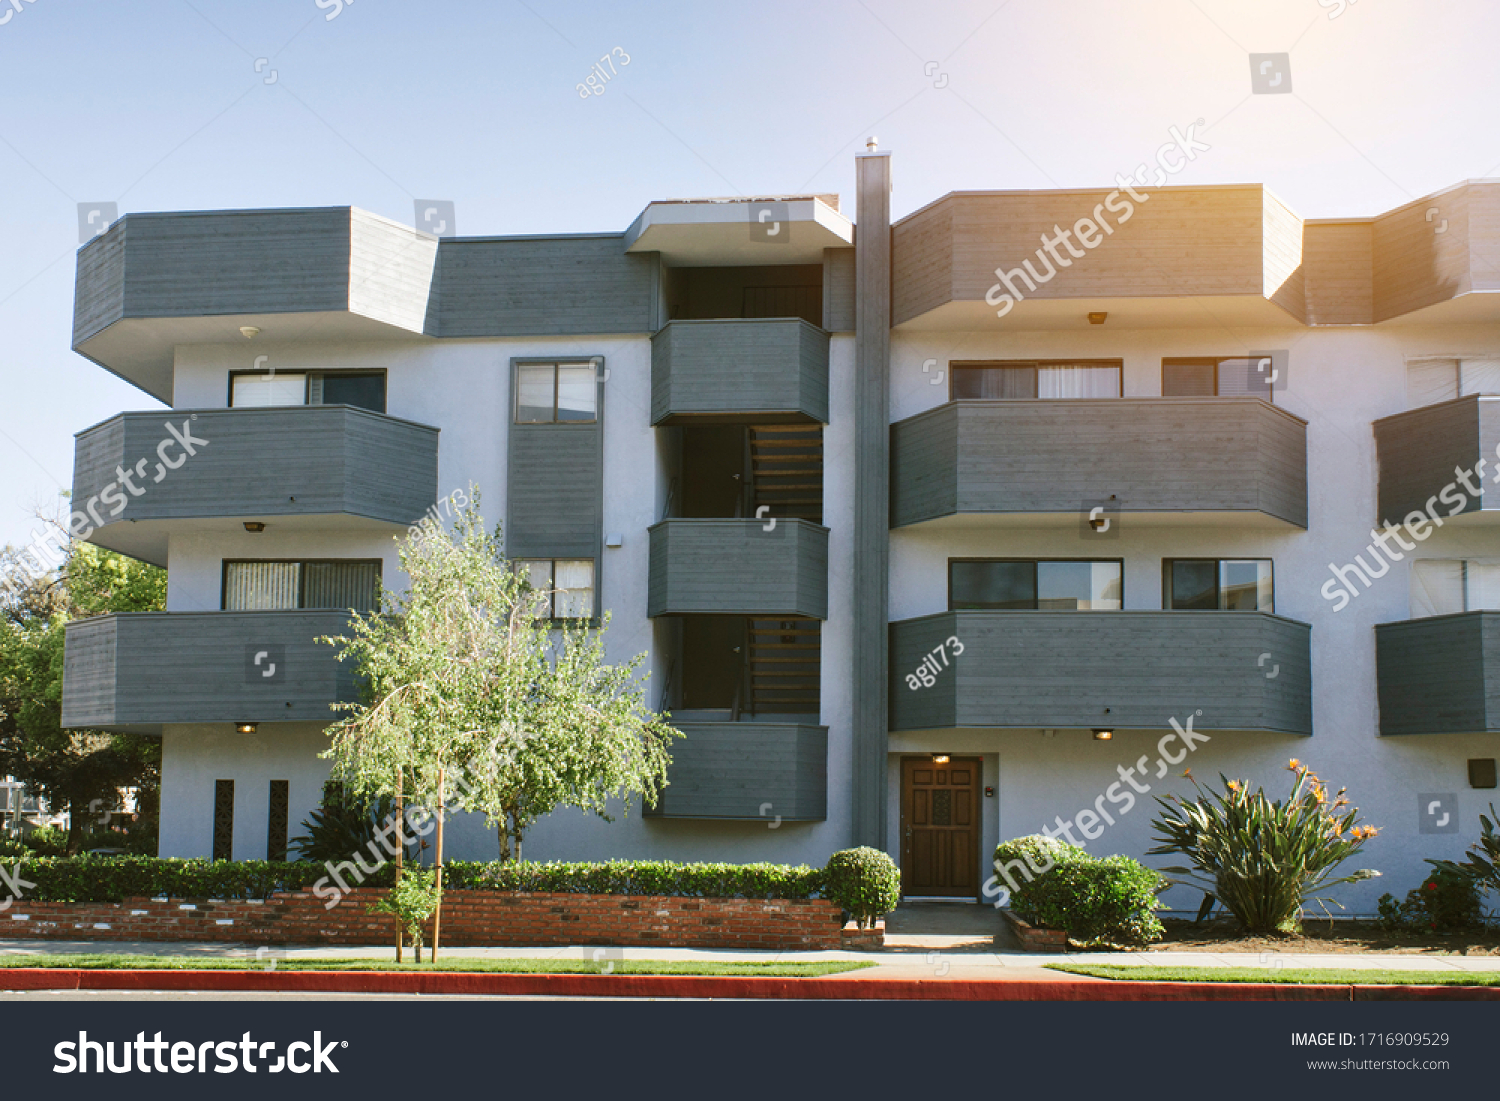 Multi Family residential building - Real Estate Rentals - Cashflow - Older #1716909529